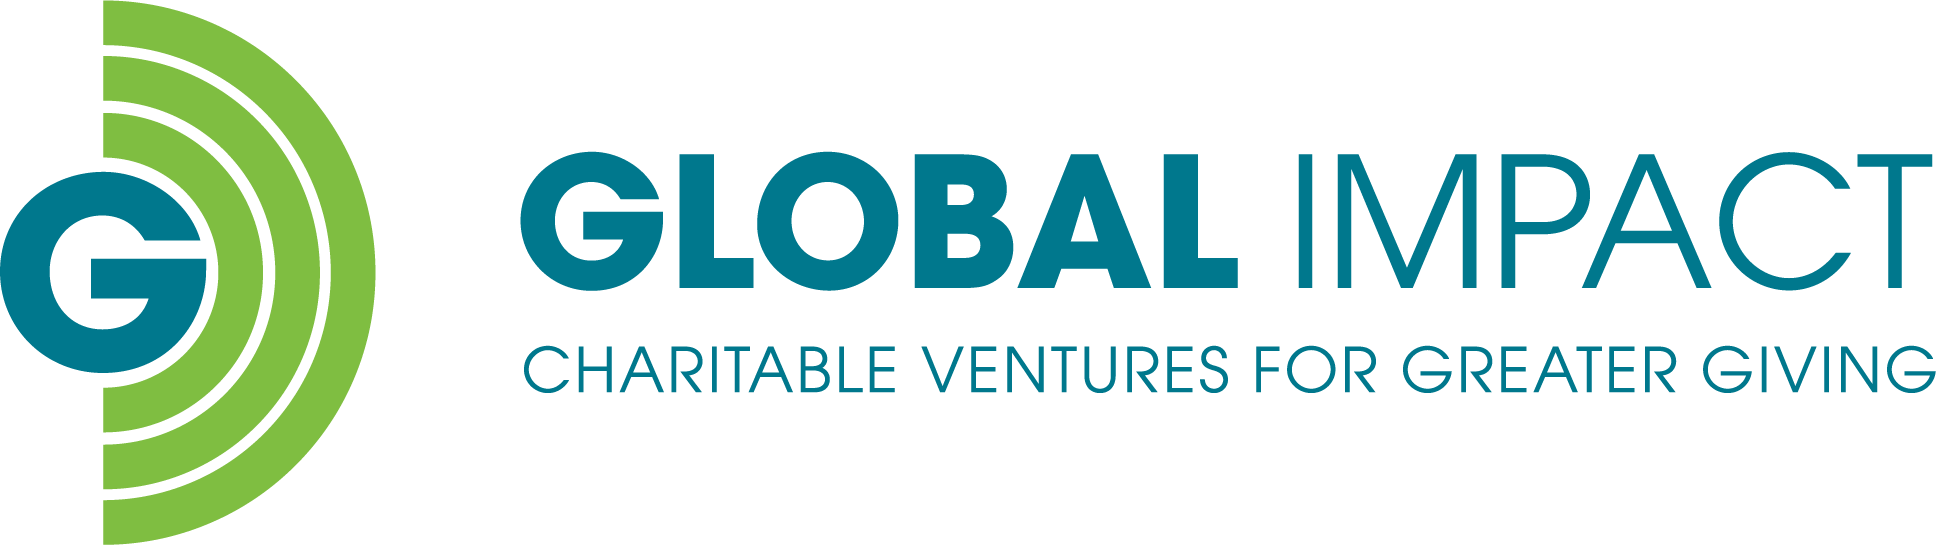 Global Impact launch